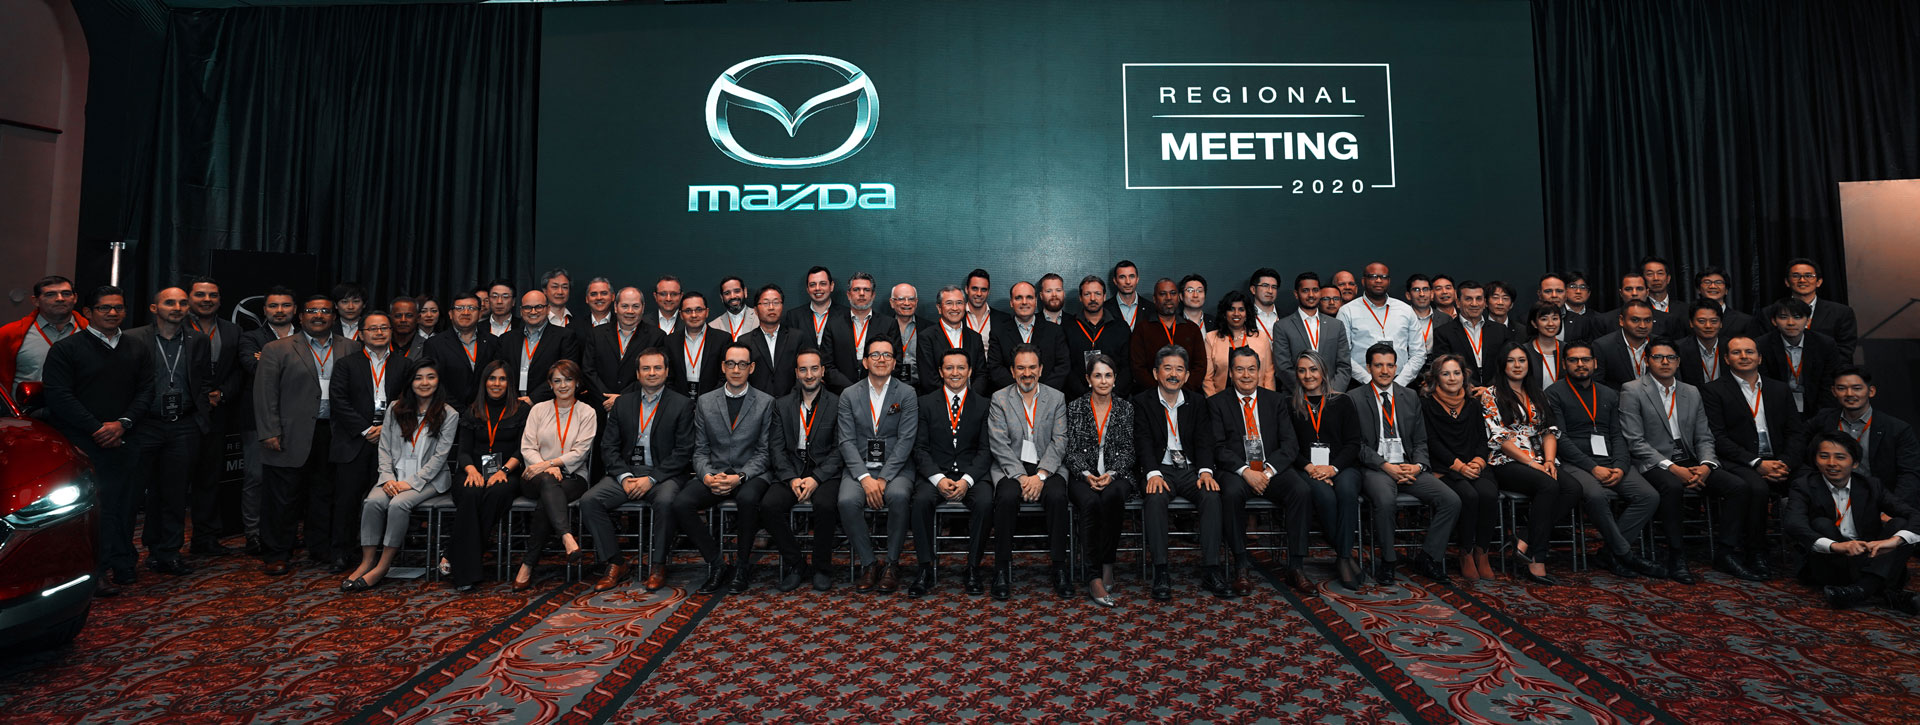 Mazda Ecuador - Regional Meeting 2020